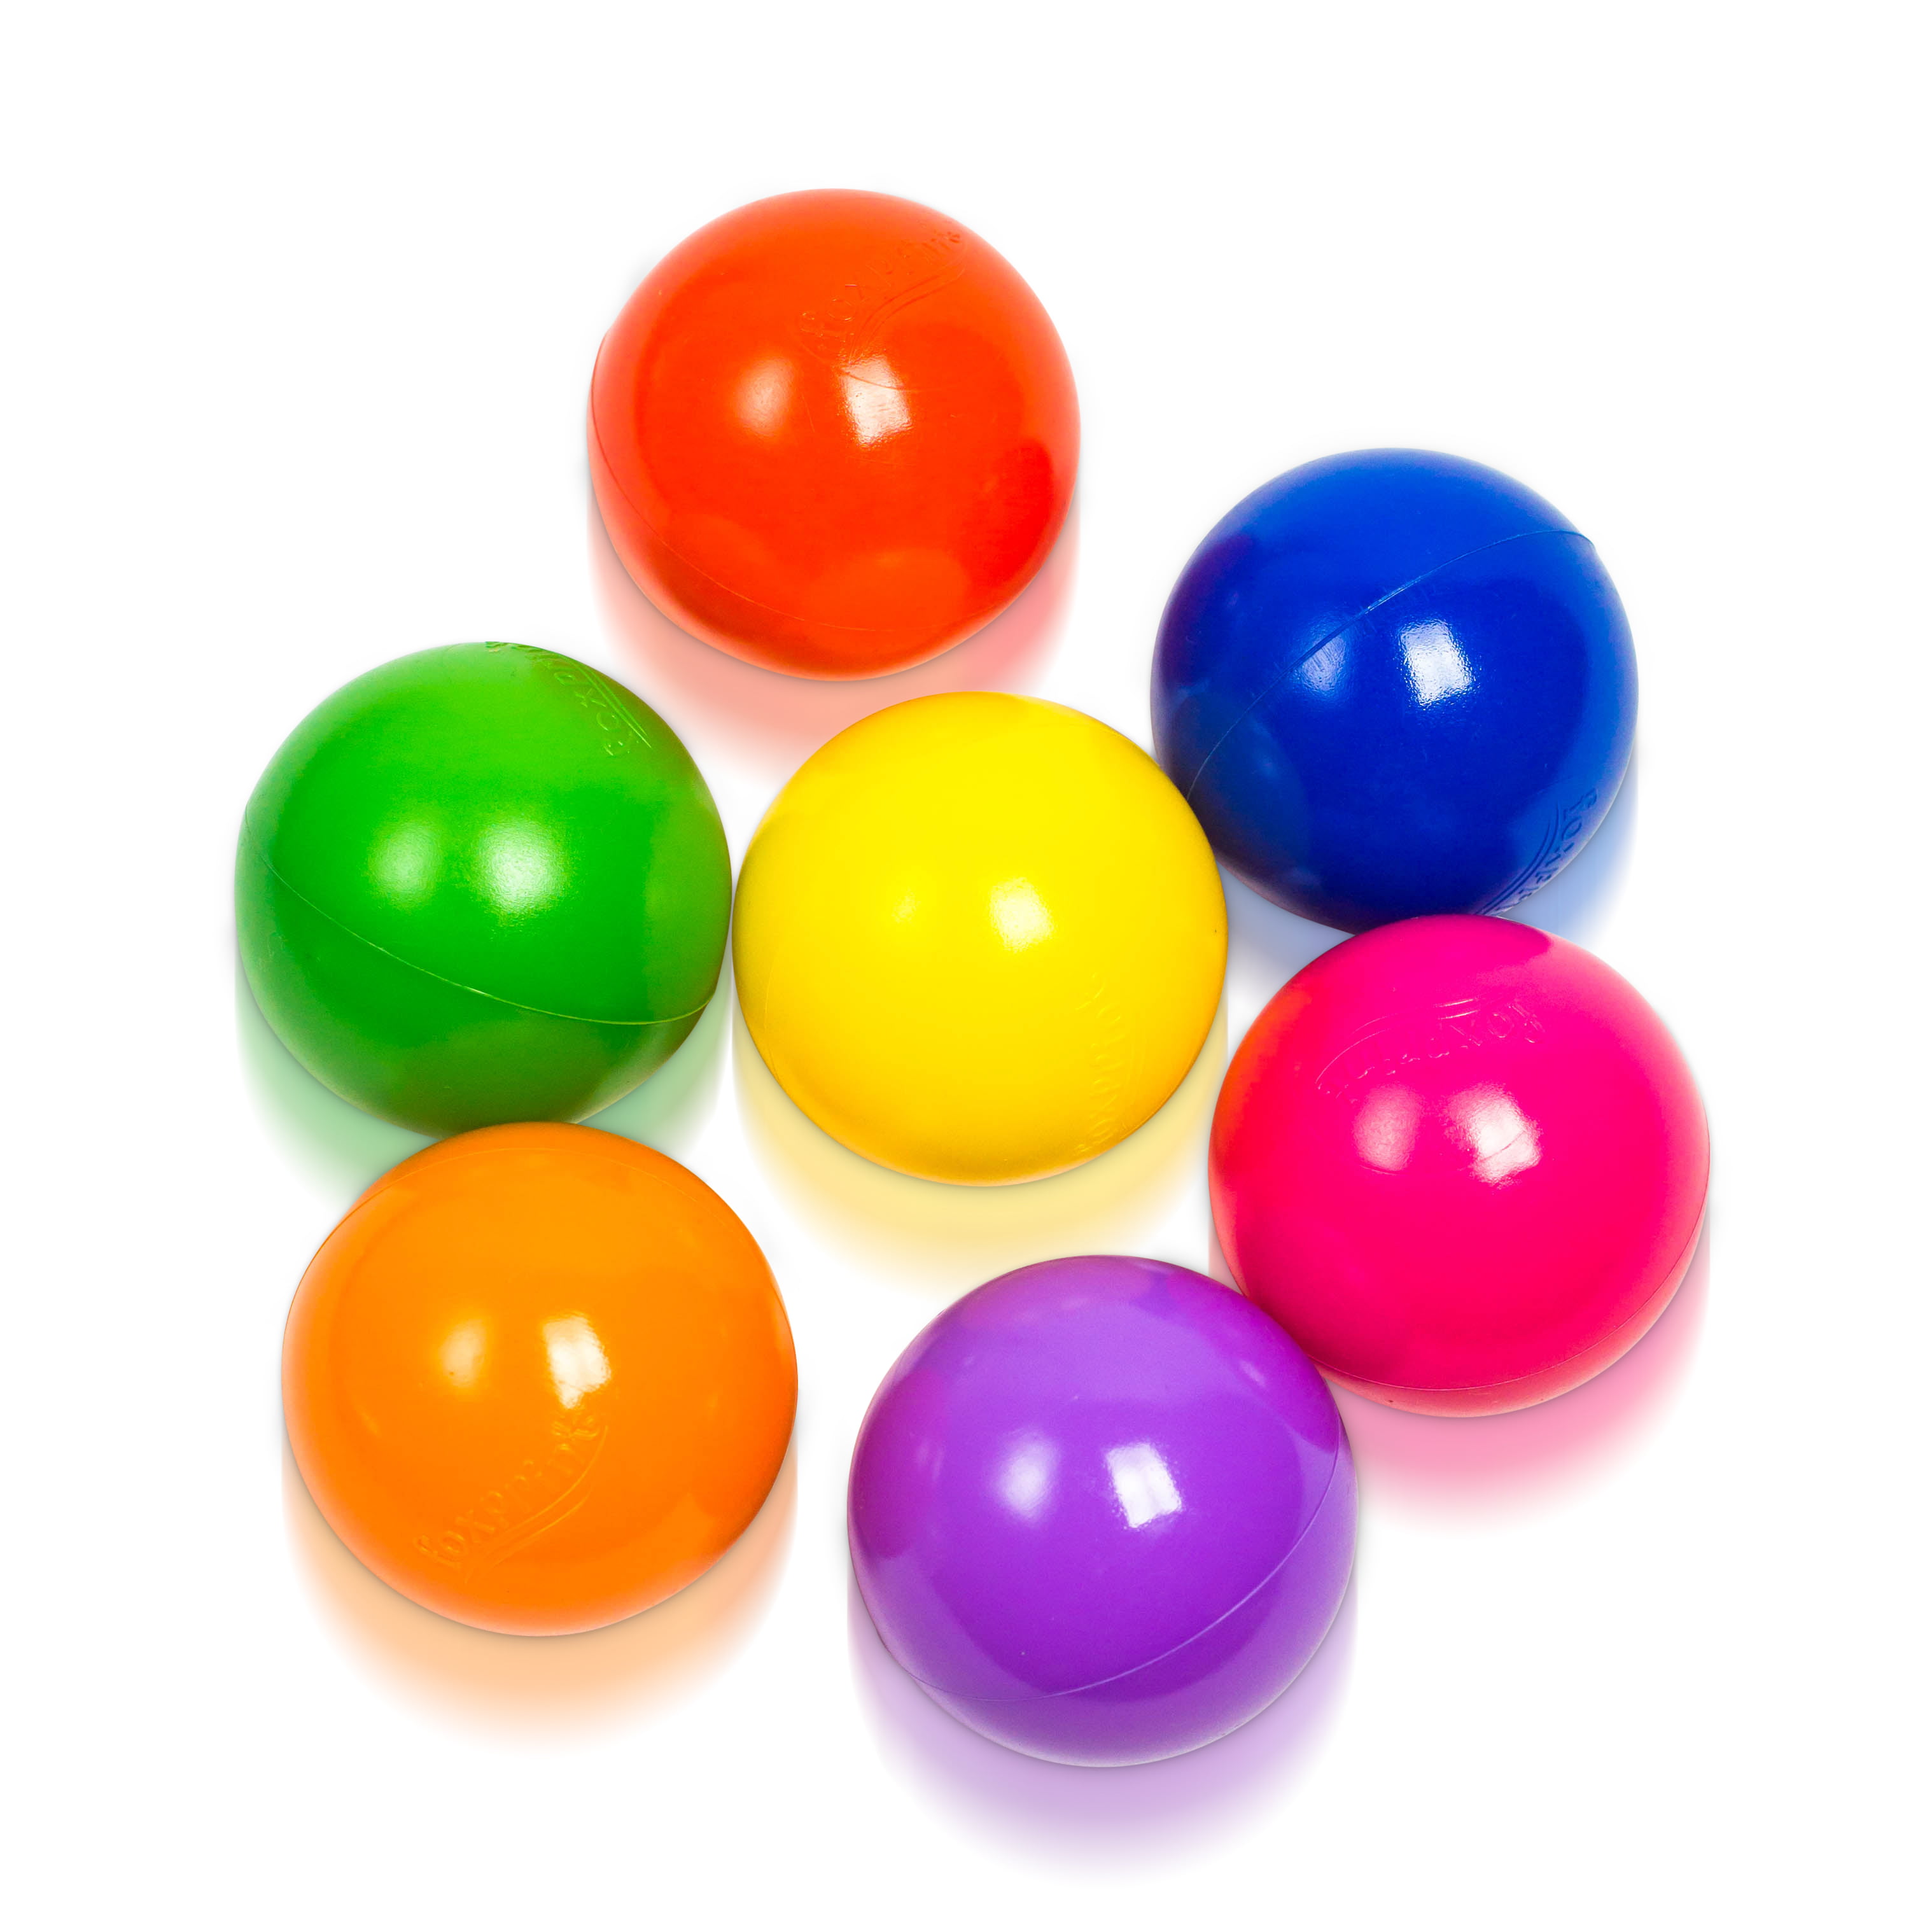 BESPORTBLE 200PCS Pit Balls Macaron Ocean Ball Crush Proof Play Balls Baby Plastic Balls for Baby or Toddler Ball Pit Kiddies Pool